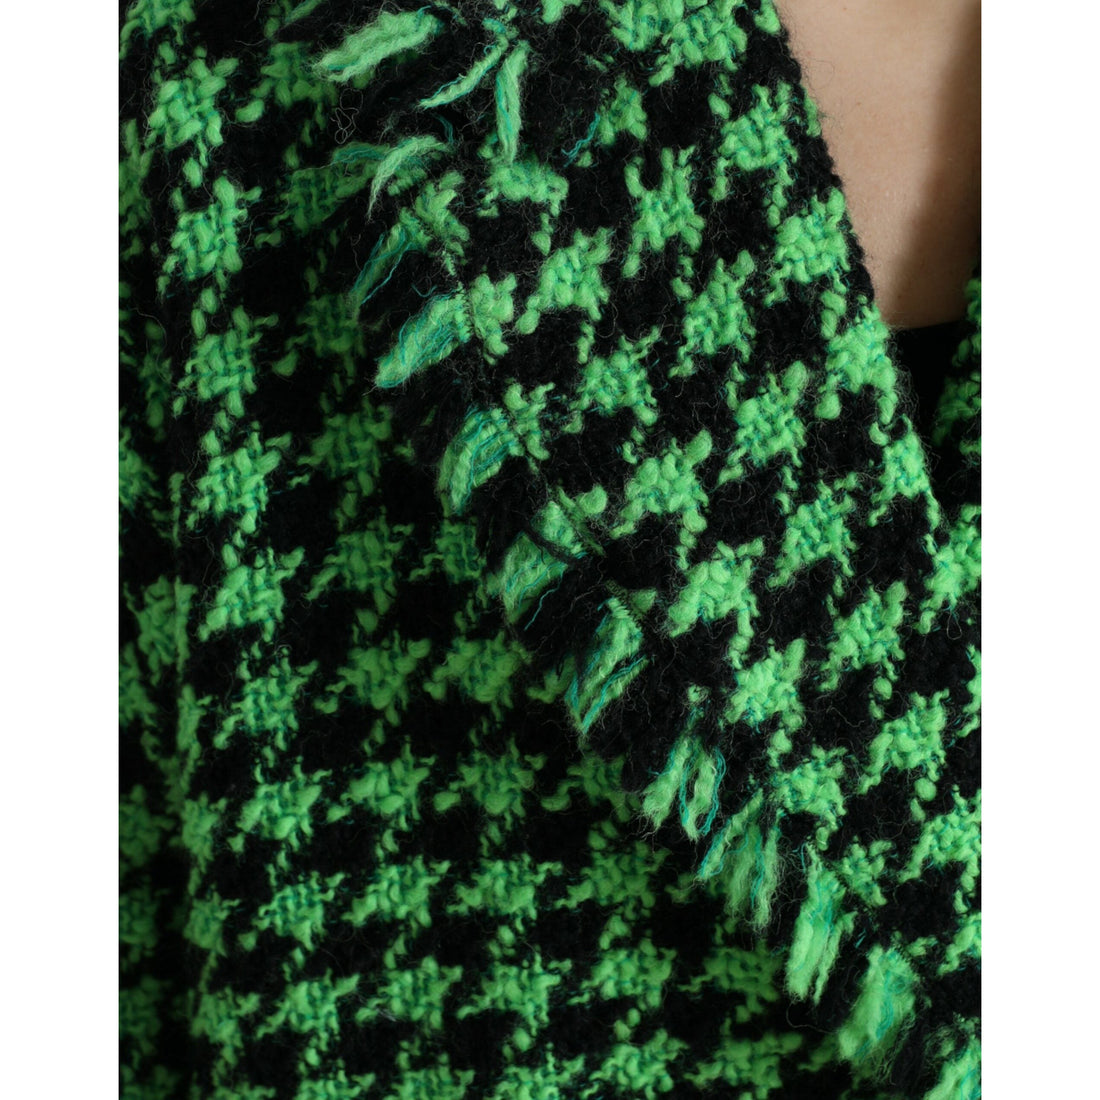 Dolce & Gabbana Green Houndstooth Full Sleeve Long Coat Jacket